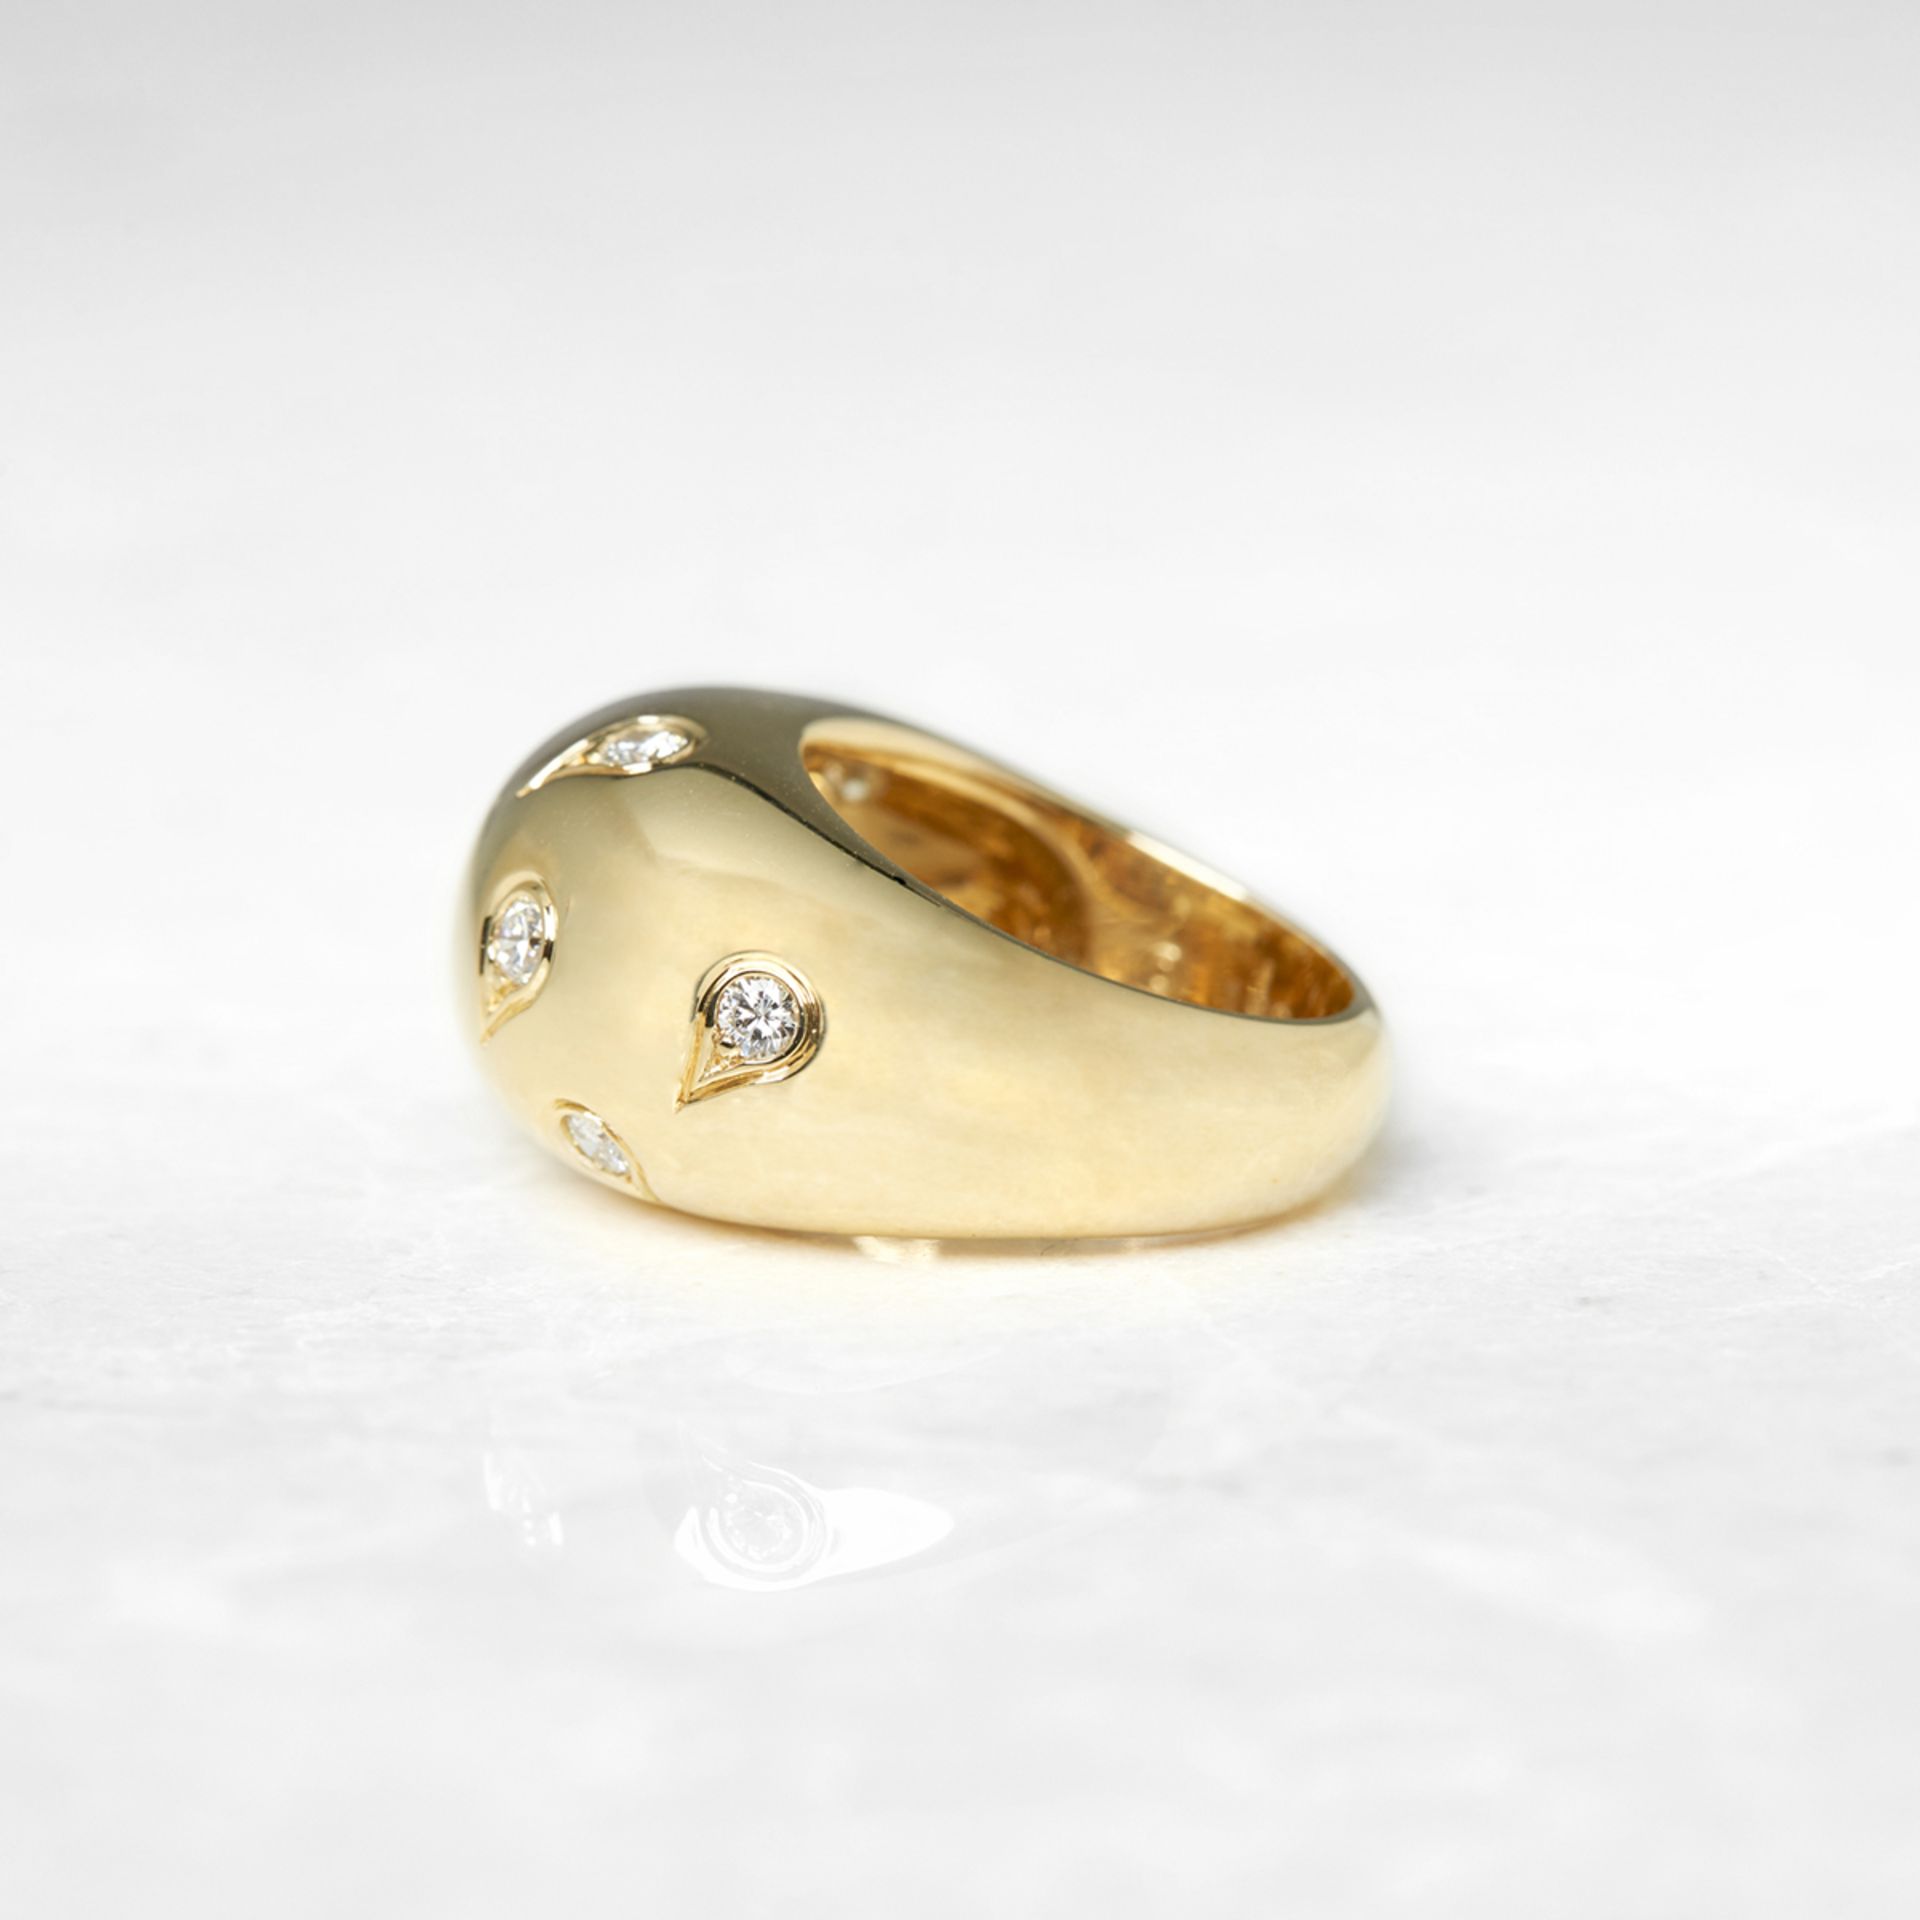 Cartier 18k Yellow Gold 1.00ct Diamond Bombe Ring - Image 4 of 8